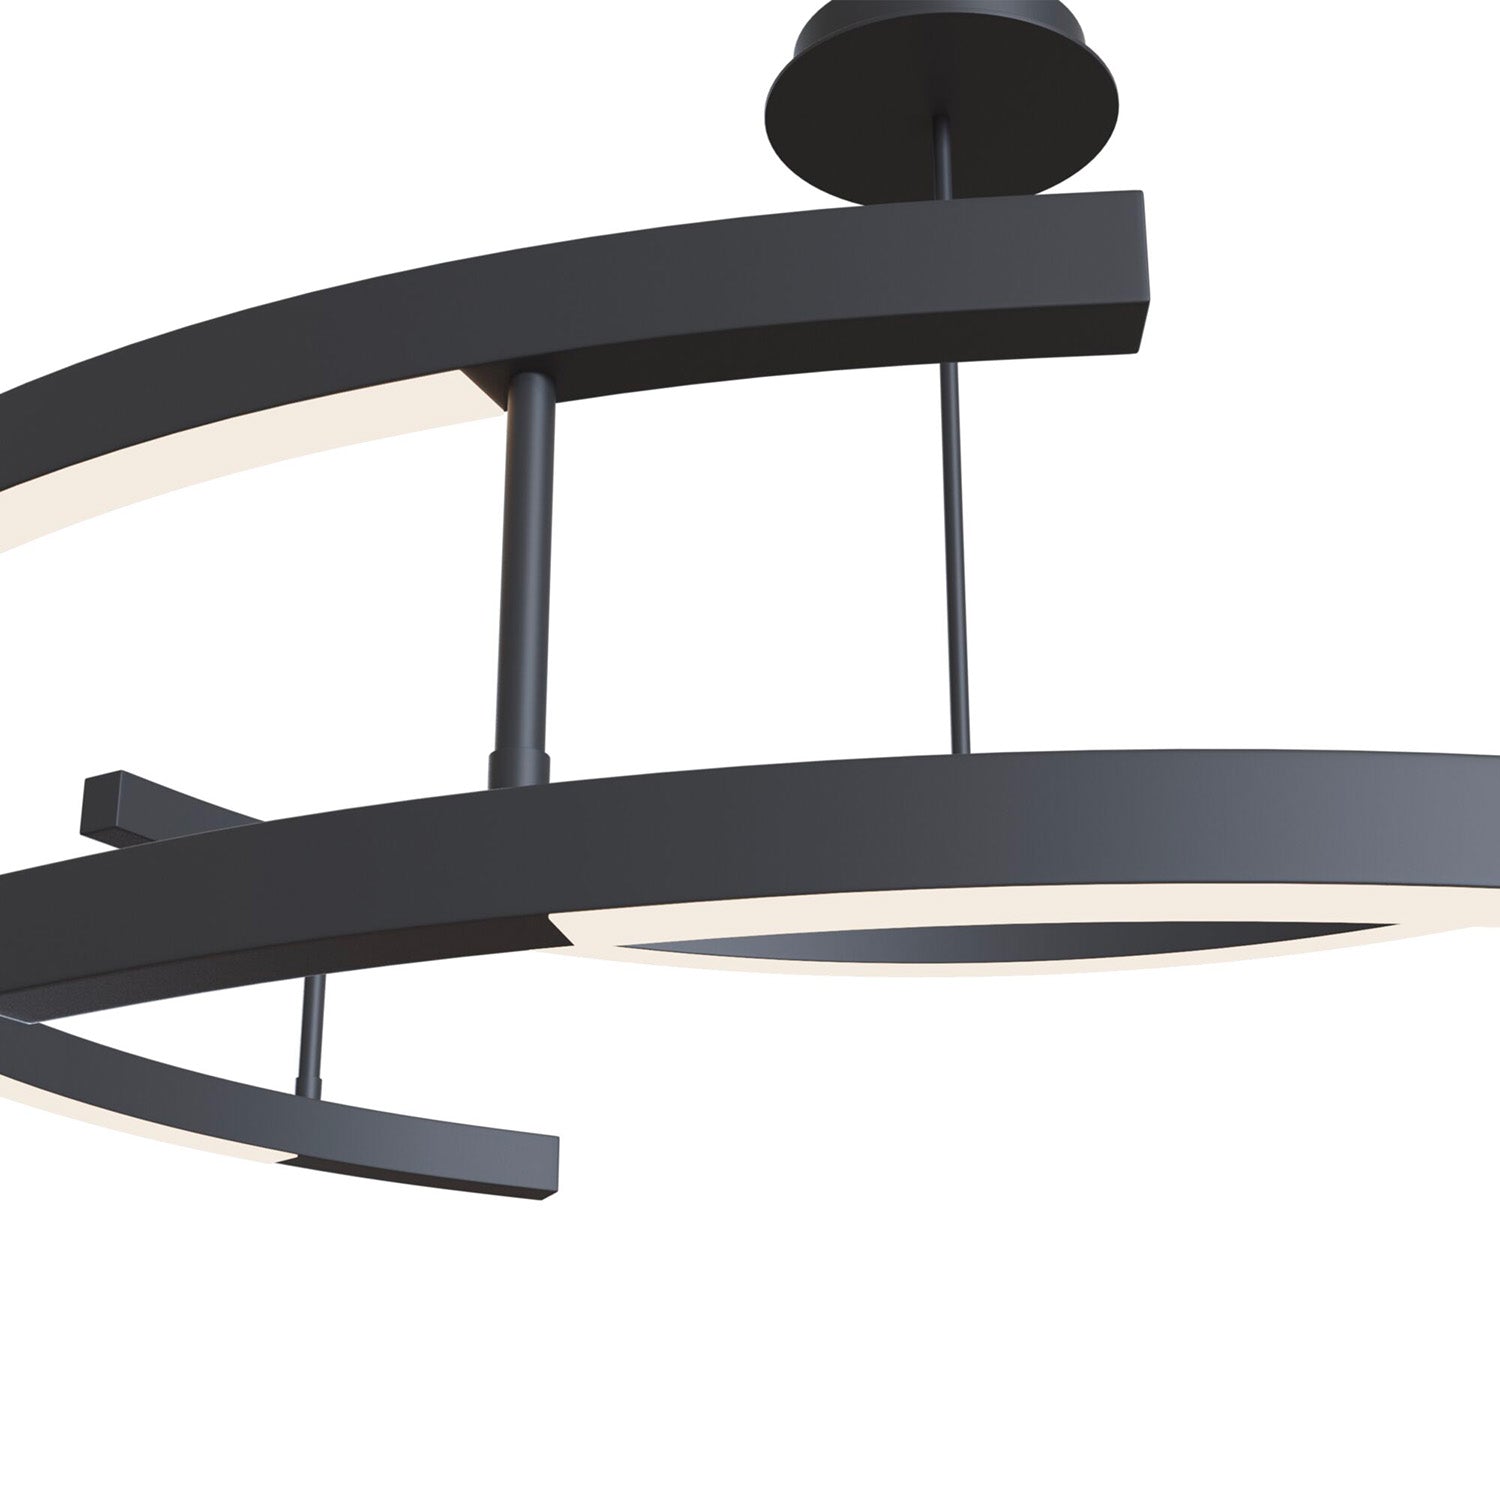 LINE A - Black geometric design pendant lamp, integrated LED